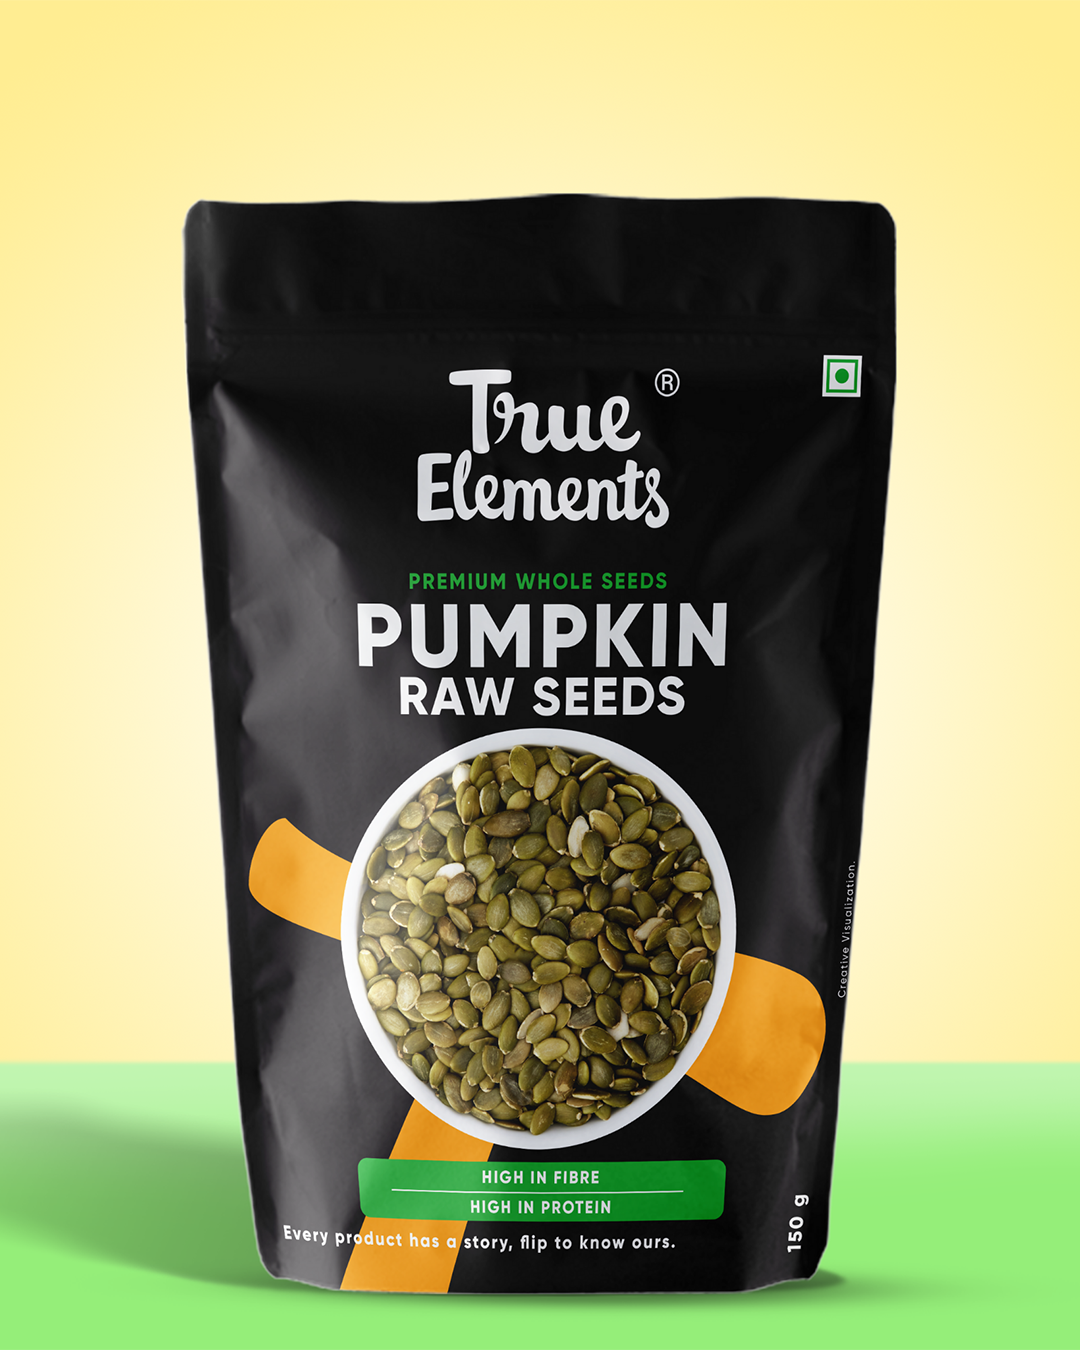 True elements raw pumpkin seeds 150g Pouch (Premium Whole Seeds)